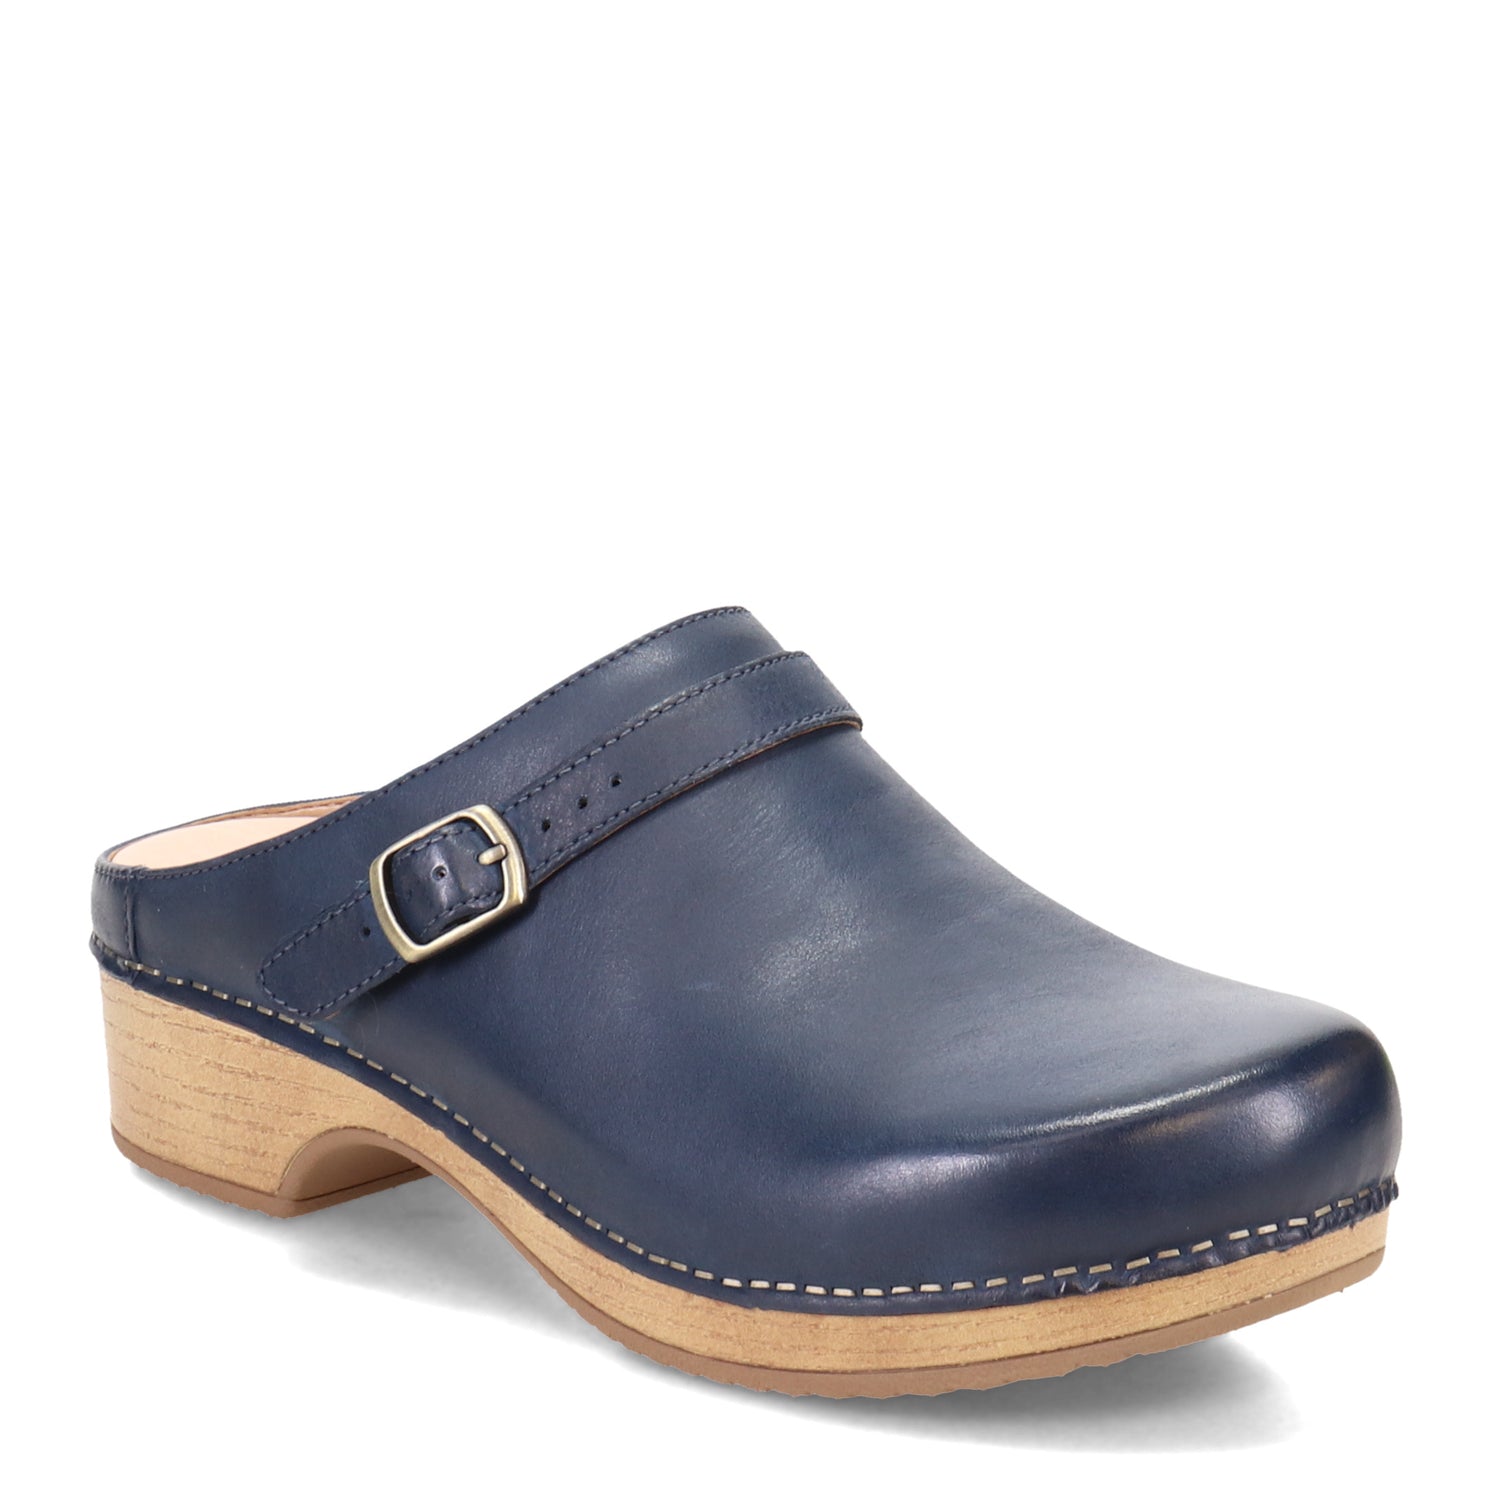 Peltz Shoes  Women's Dansko Berry Clog Navy 9421-541600